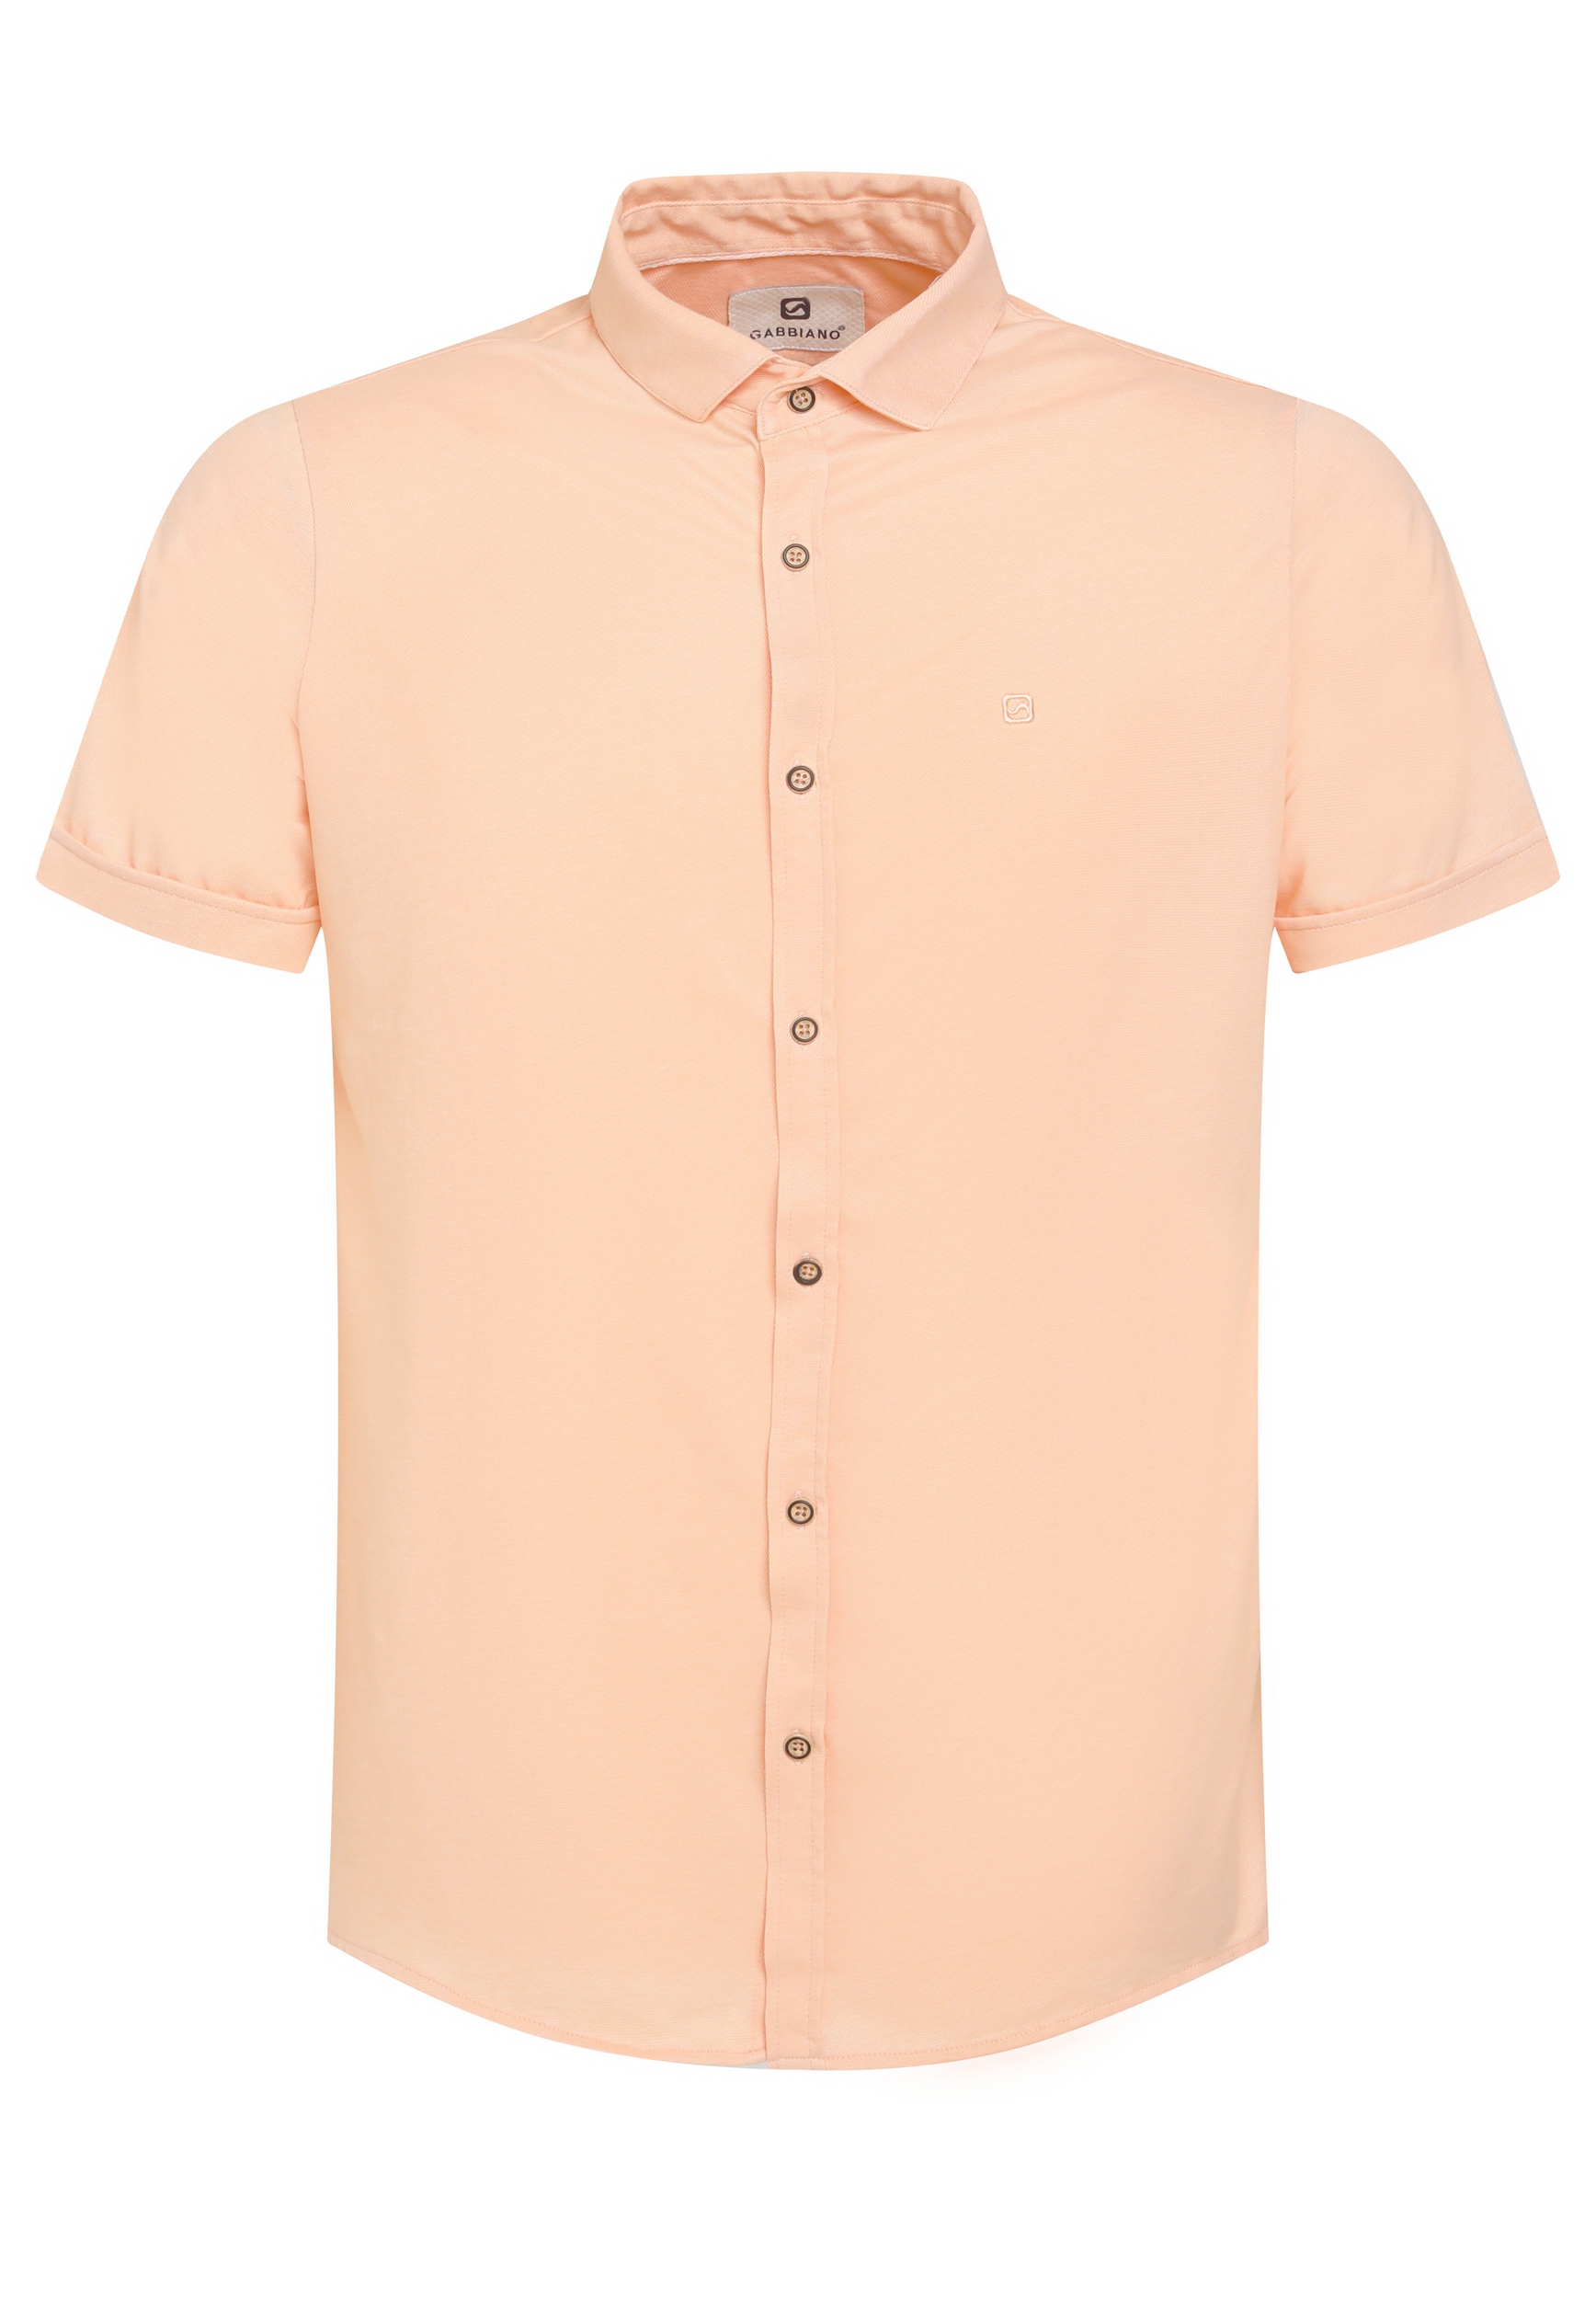 Gabbiano Male Overhemden 334551 Shirt Ss